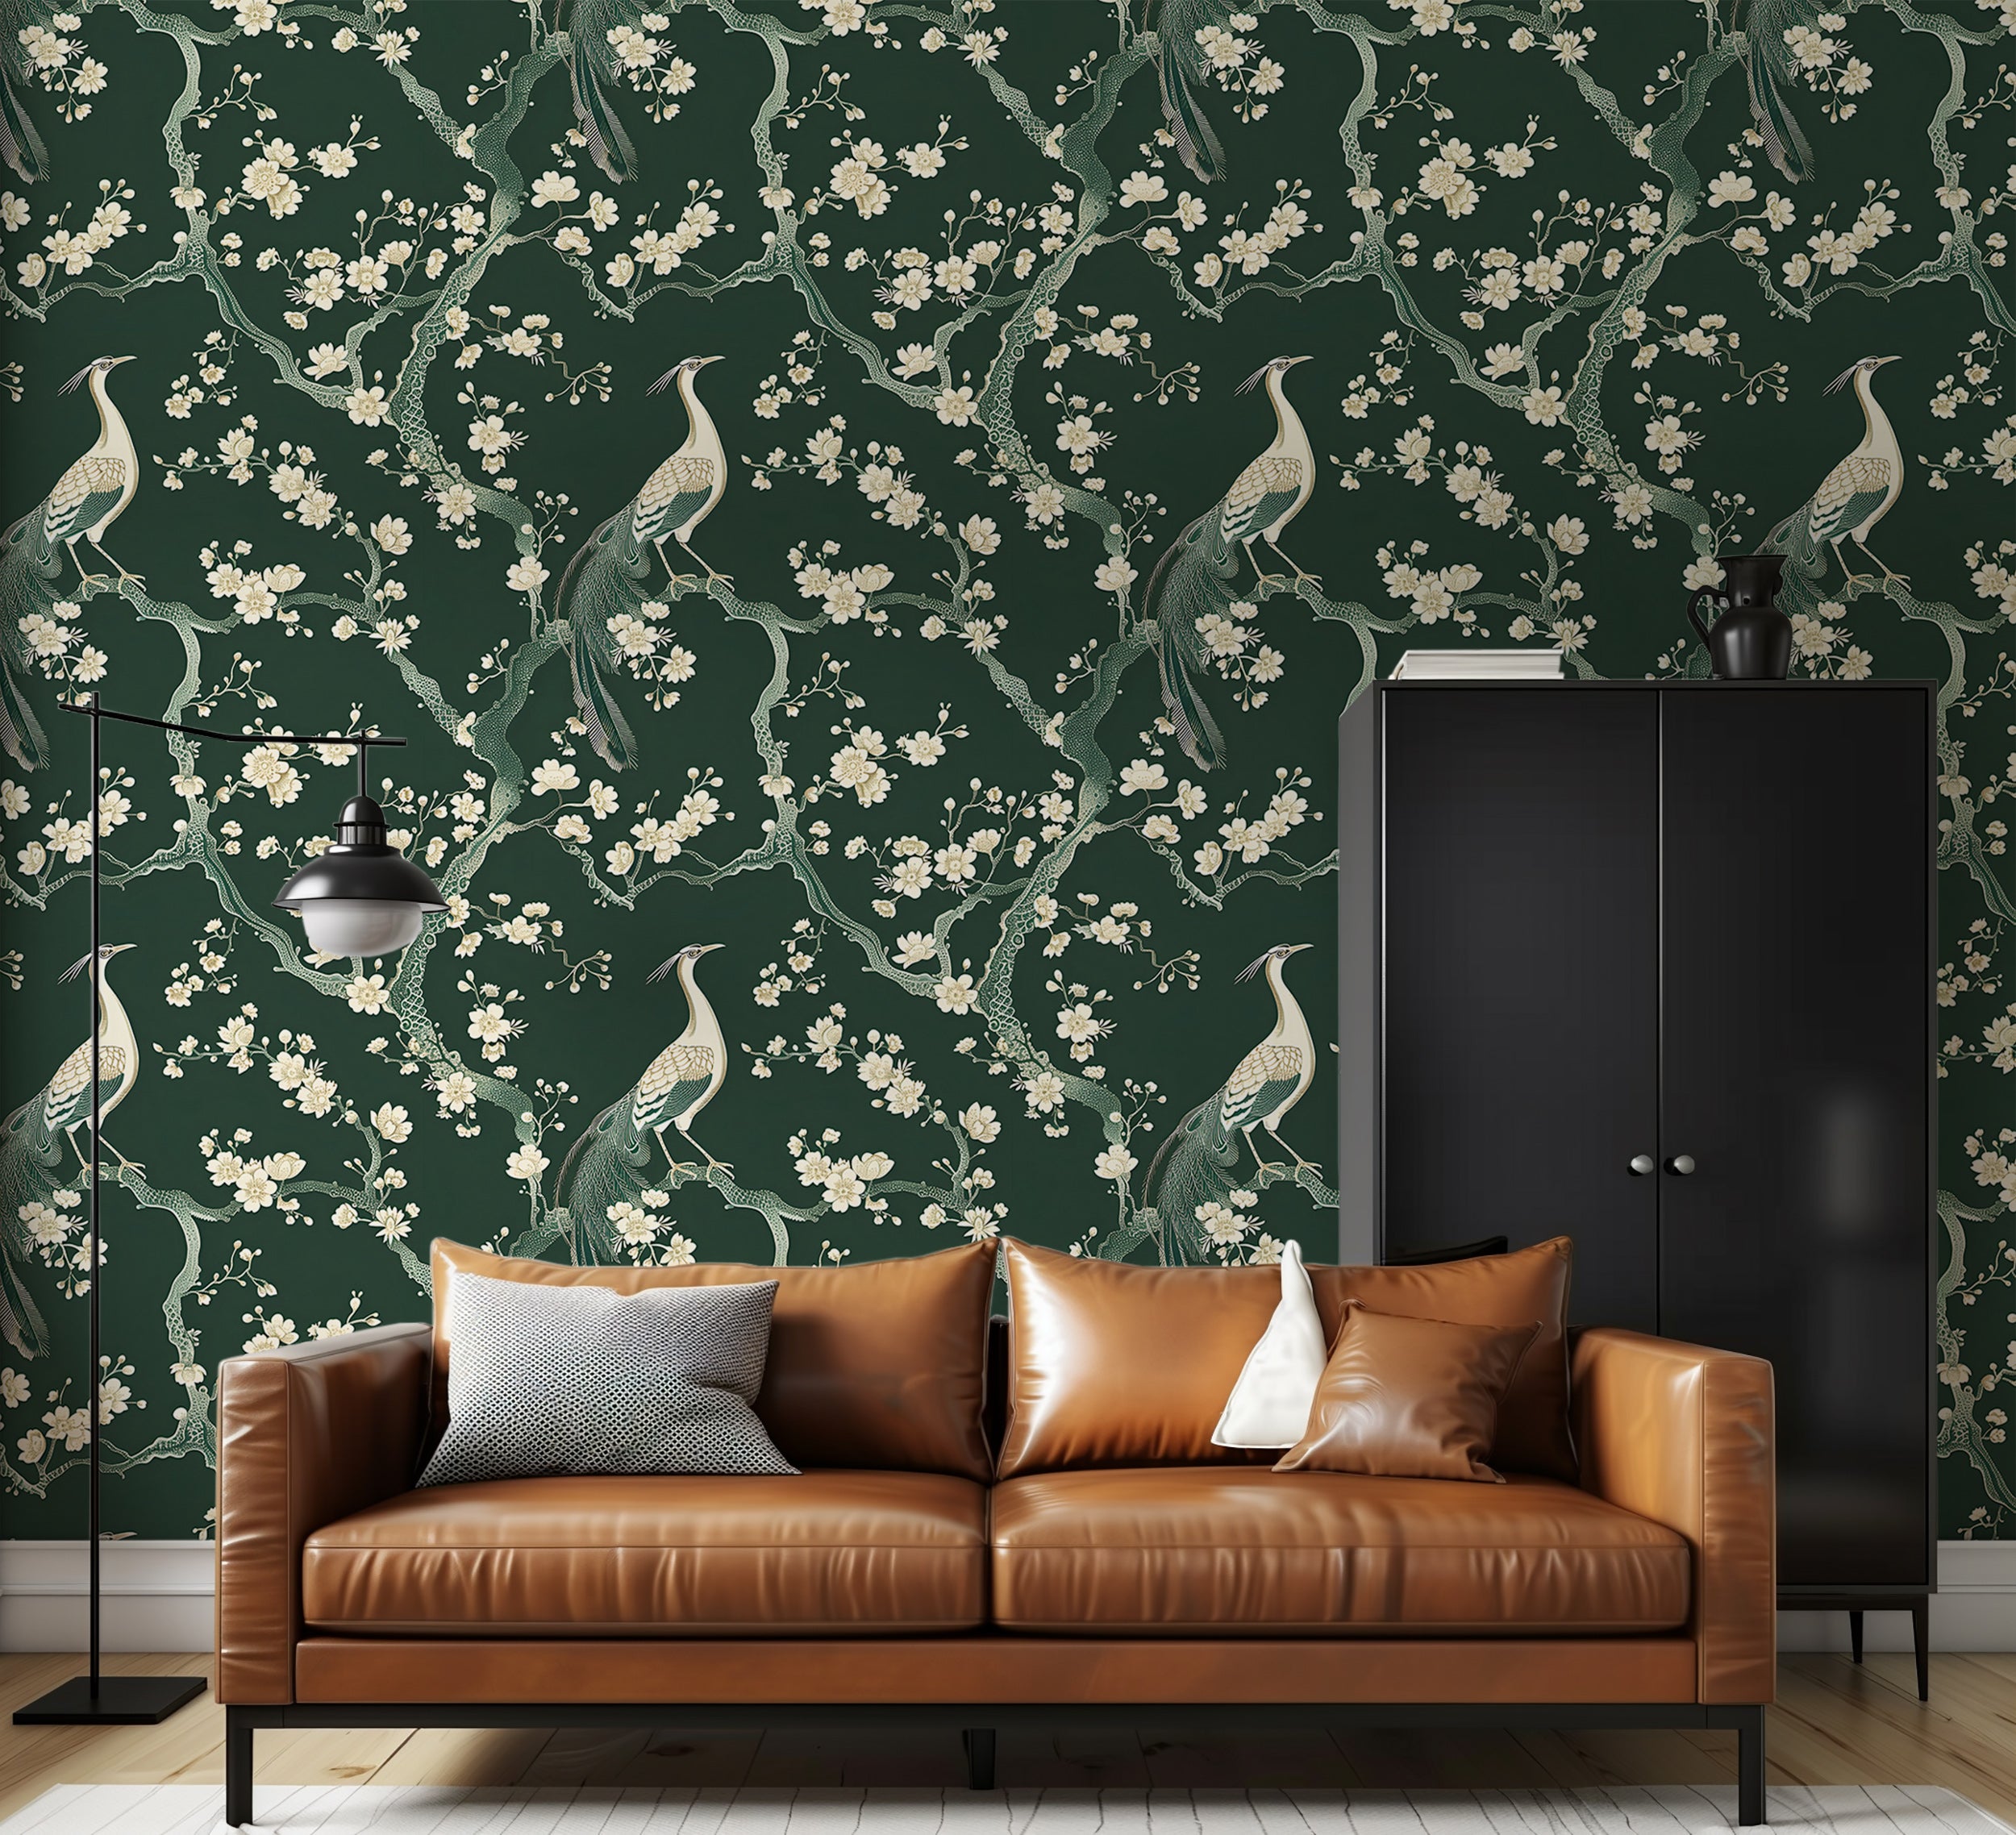 Green and beige botanical wallpaper